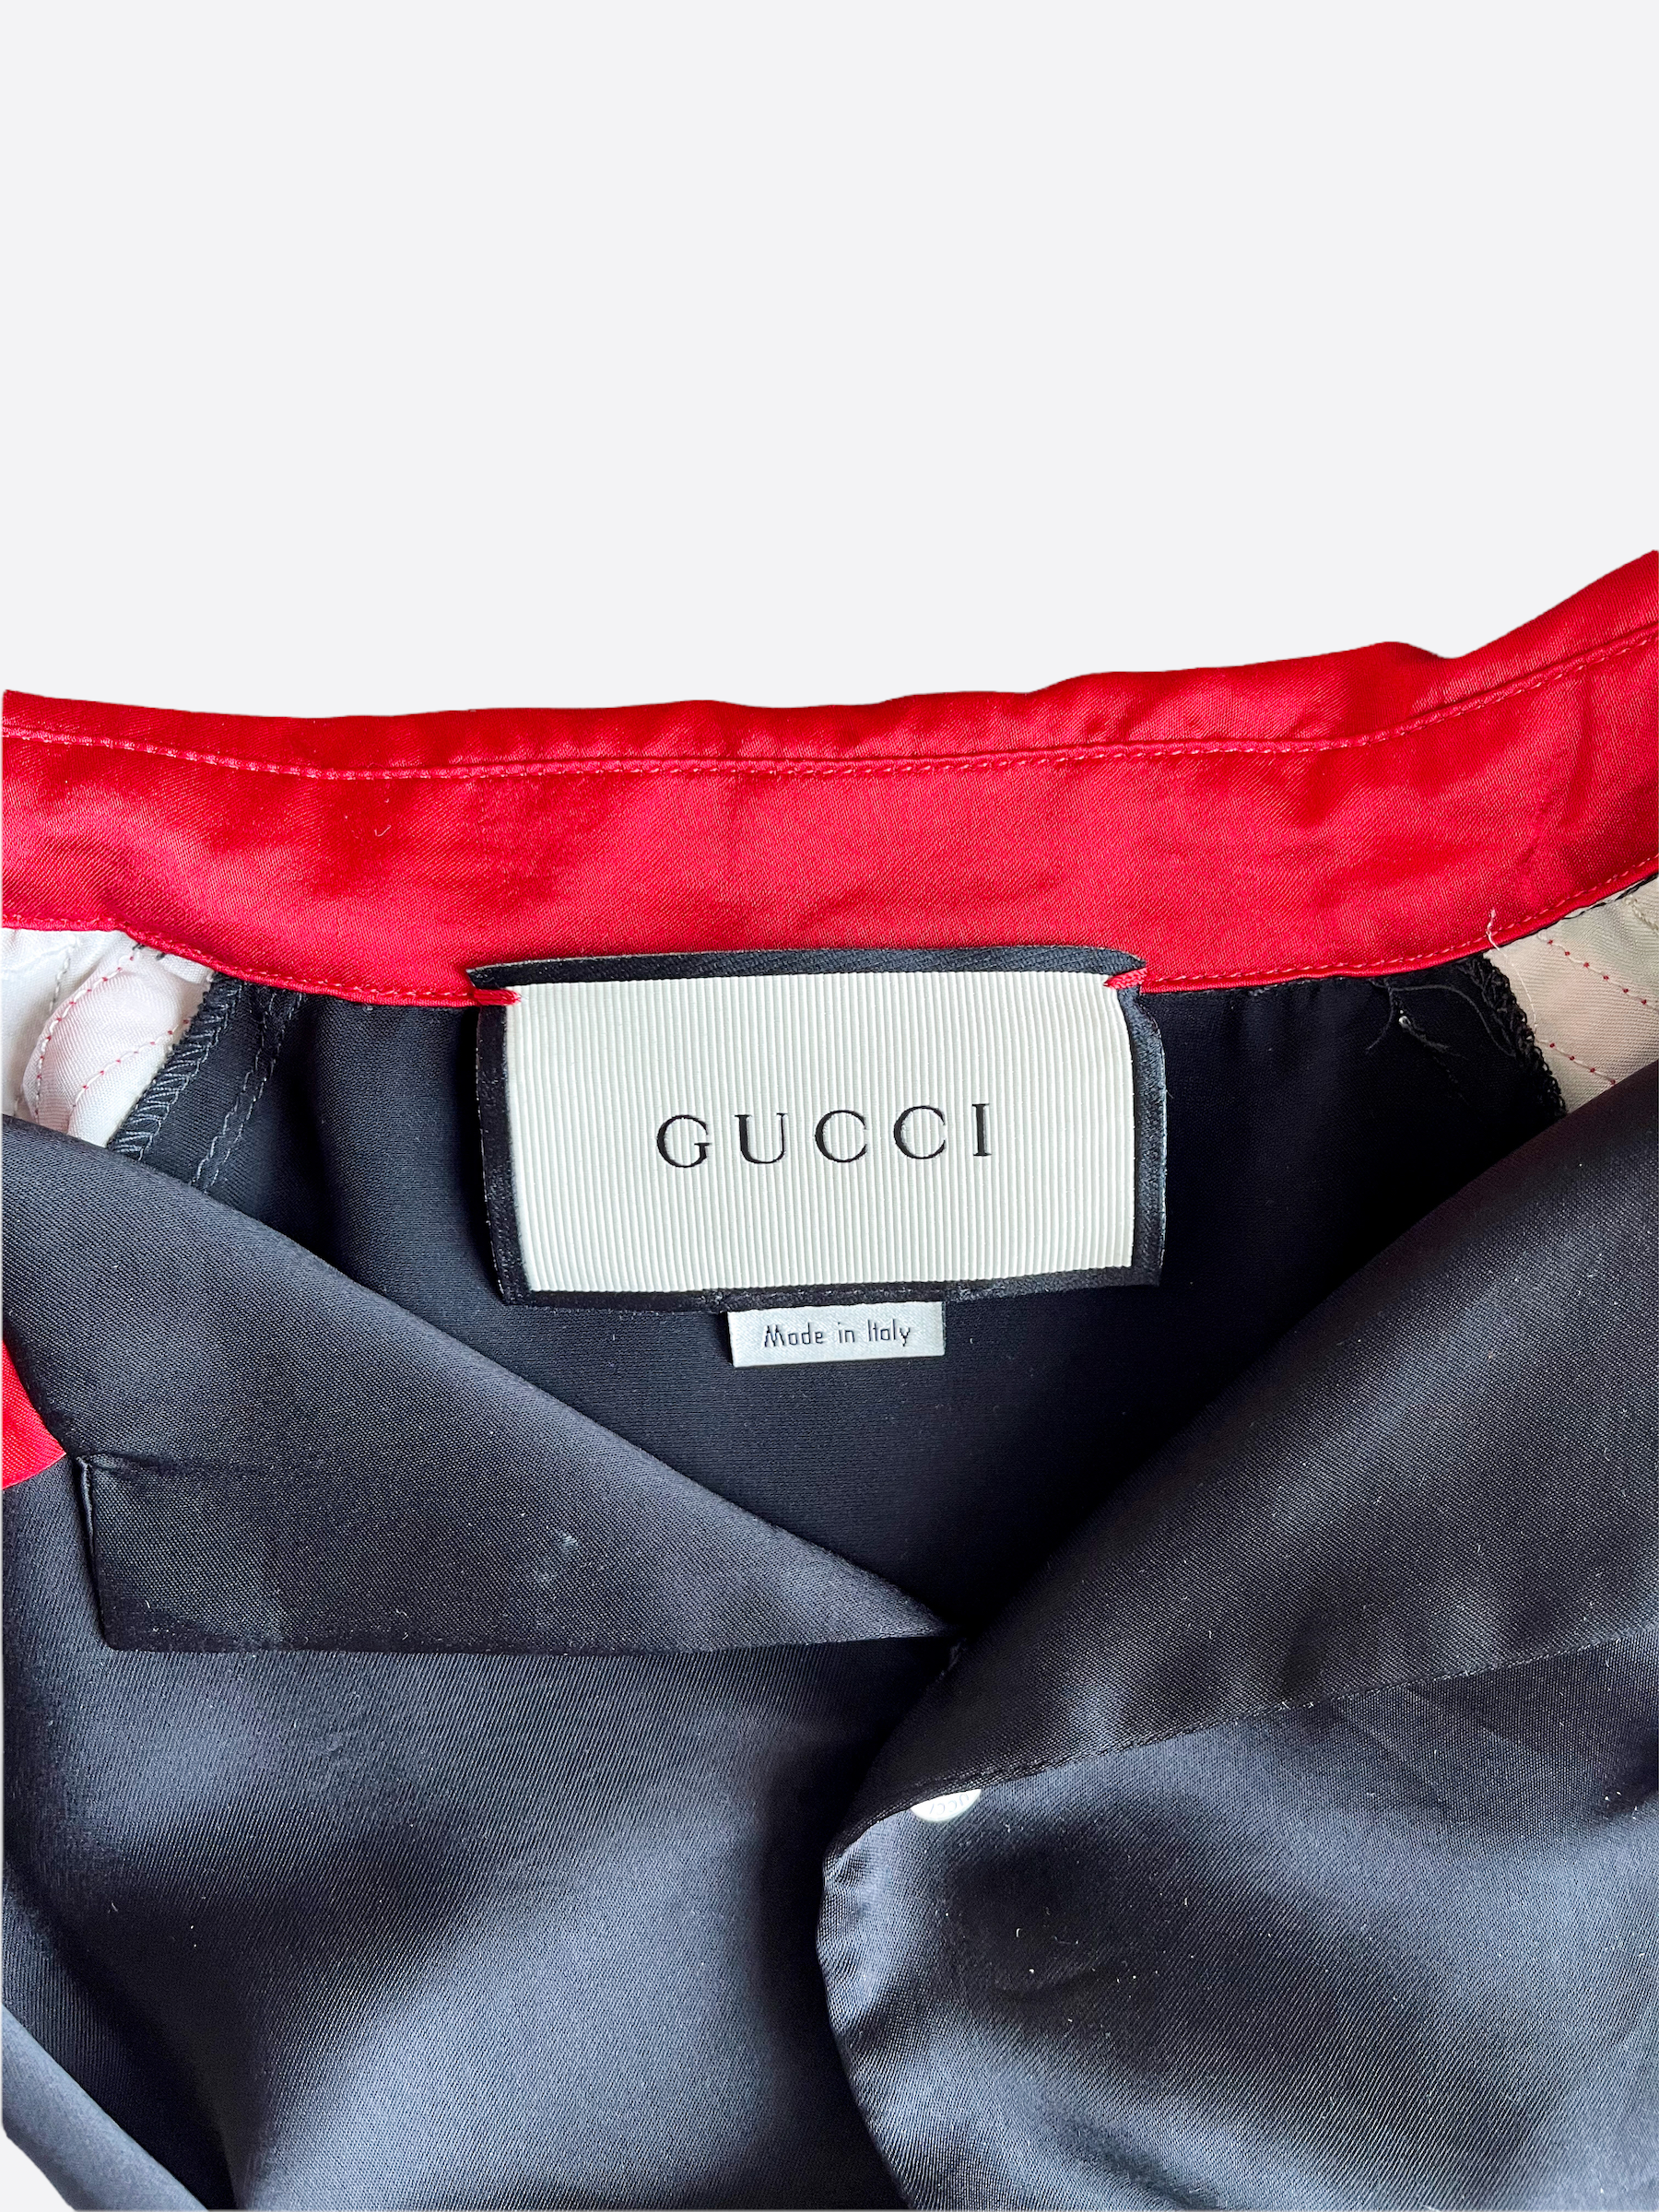 Gucci cherries cotton bowling shirt in mullticolour